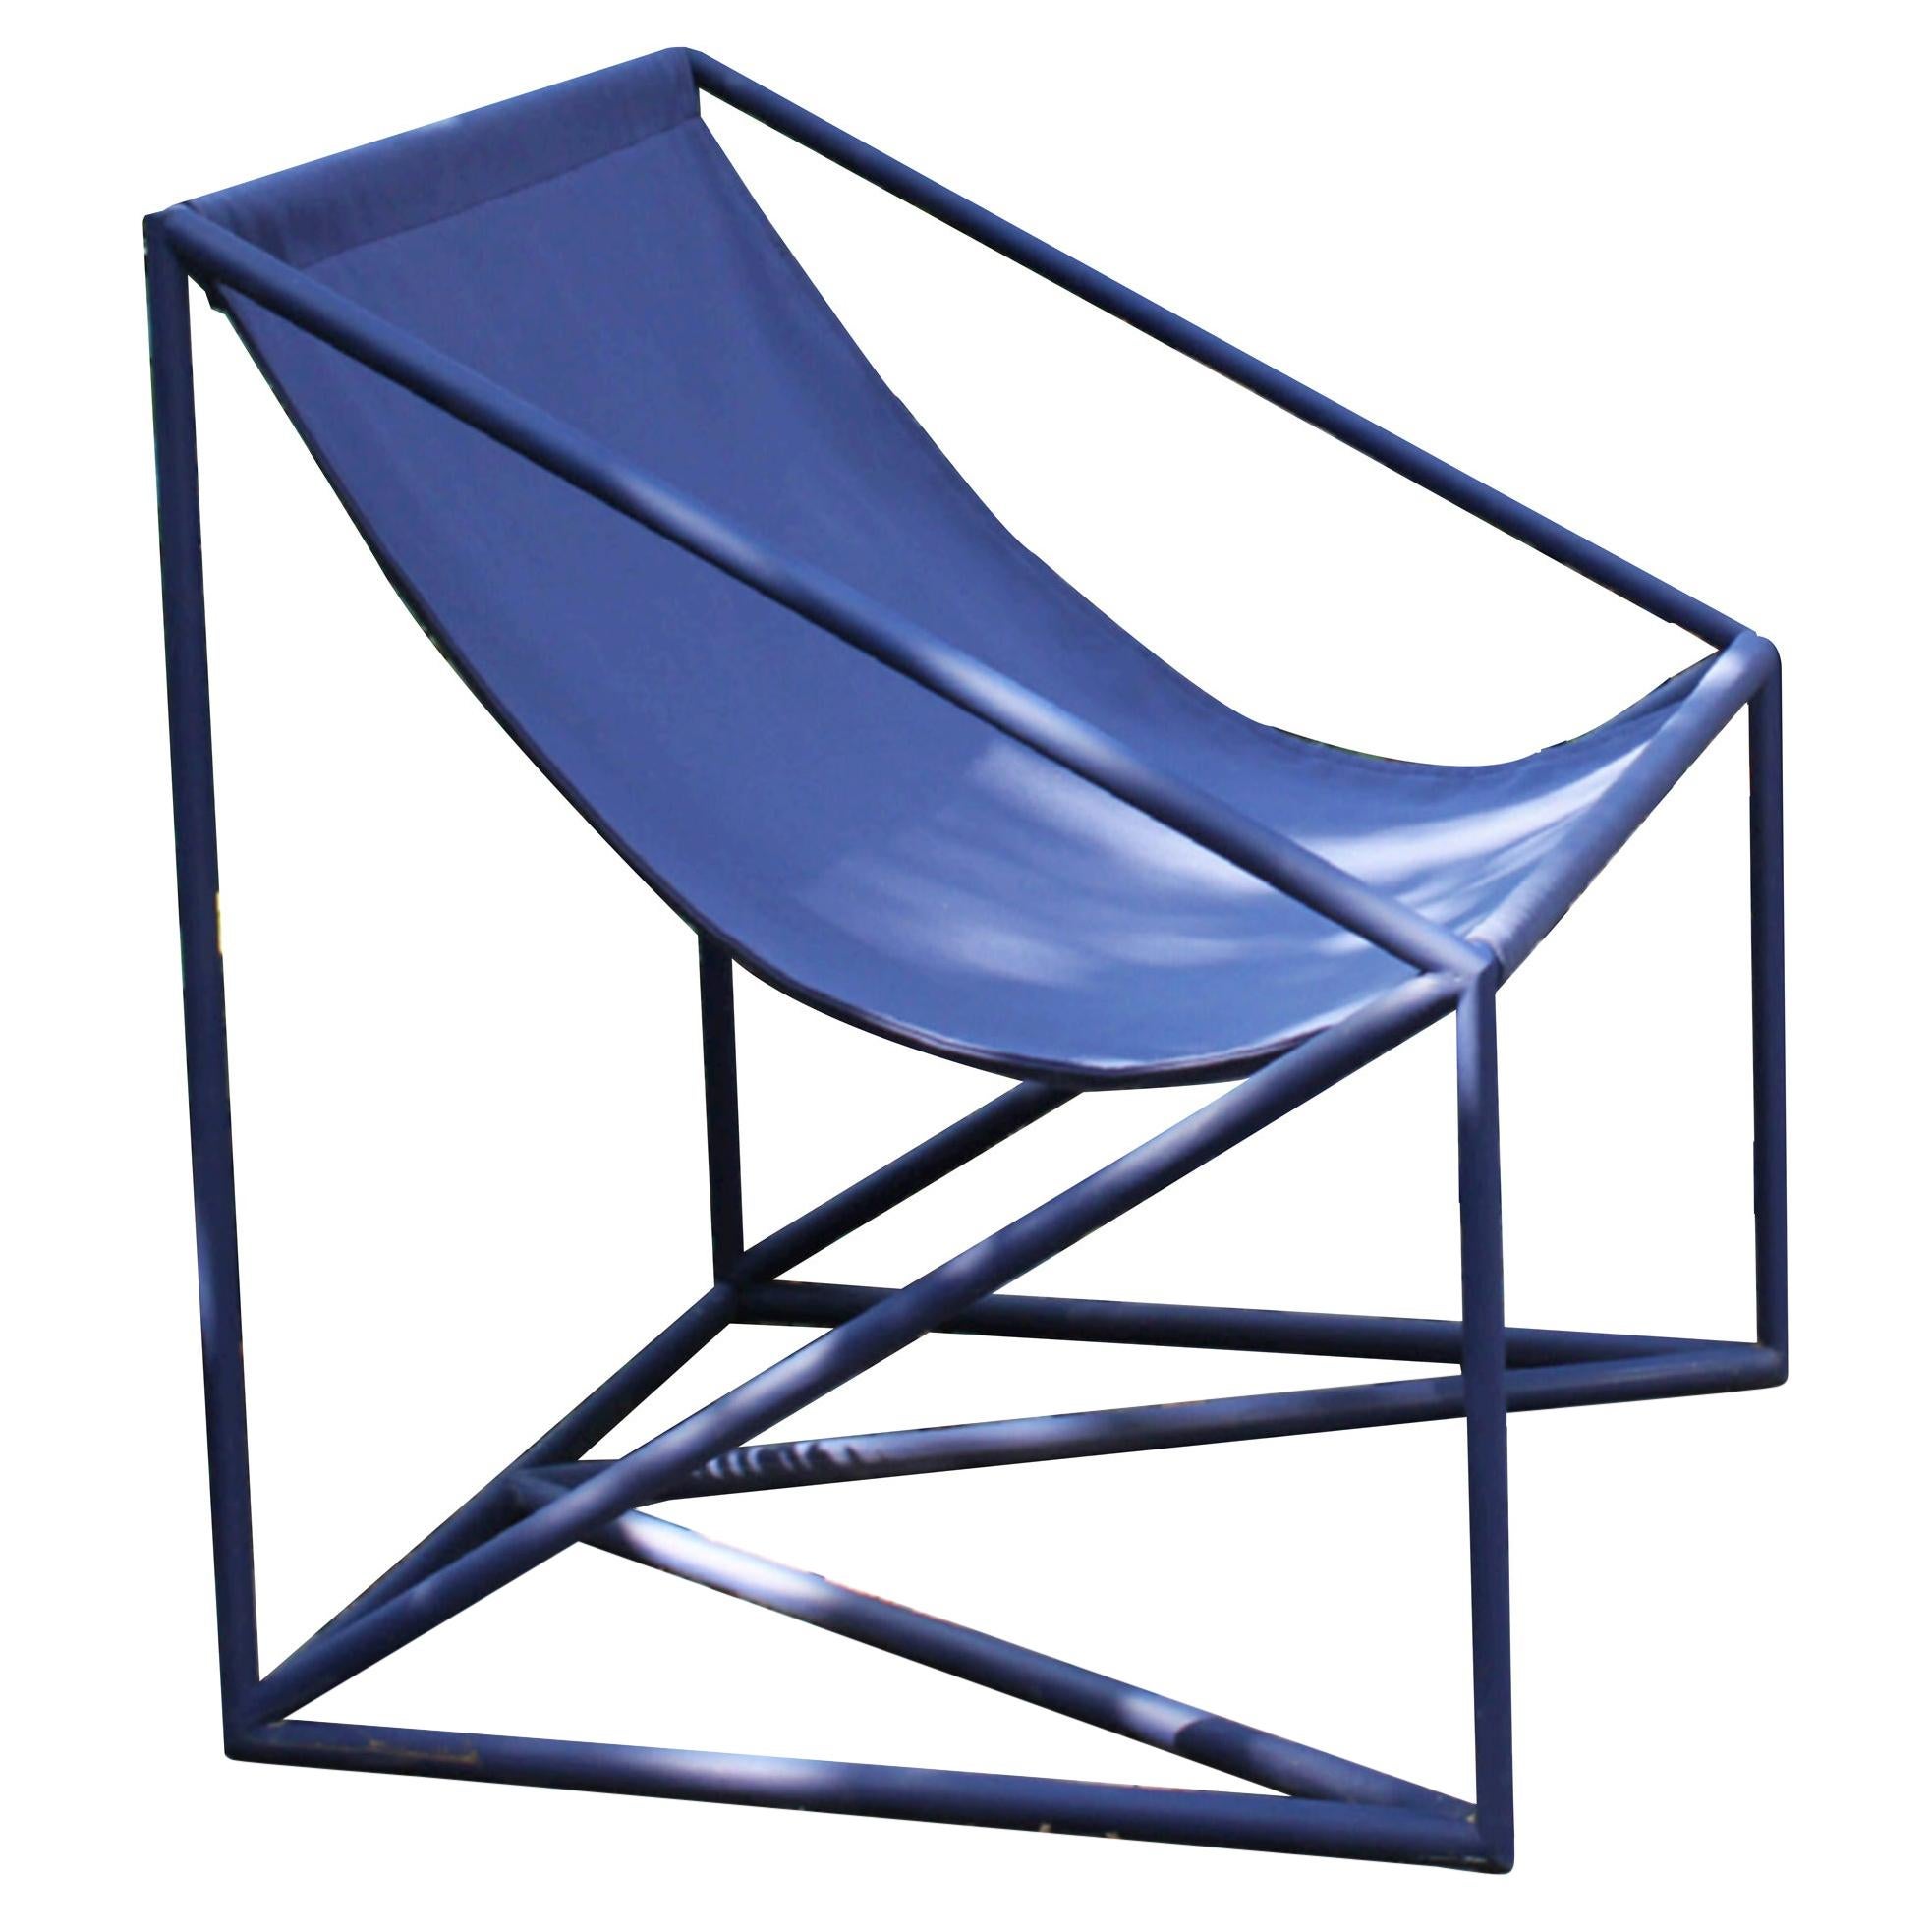 La Tuba Outdoor Chair, Maria Beckmann, Represented by Tuleste Factory